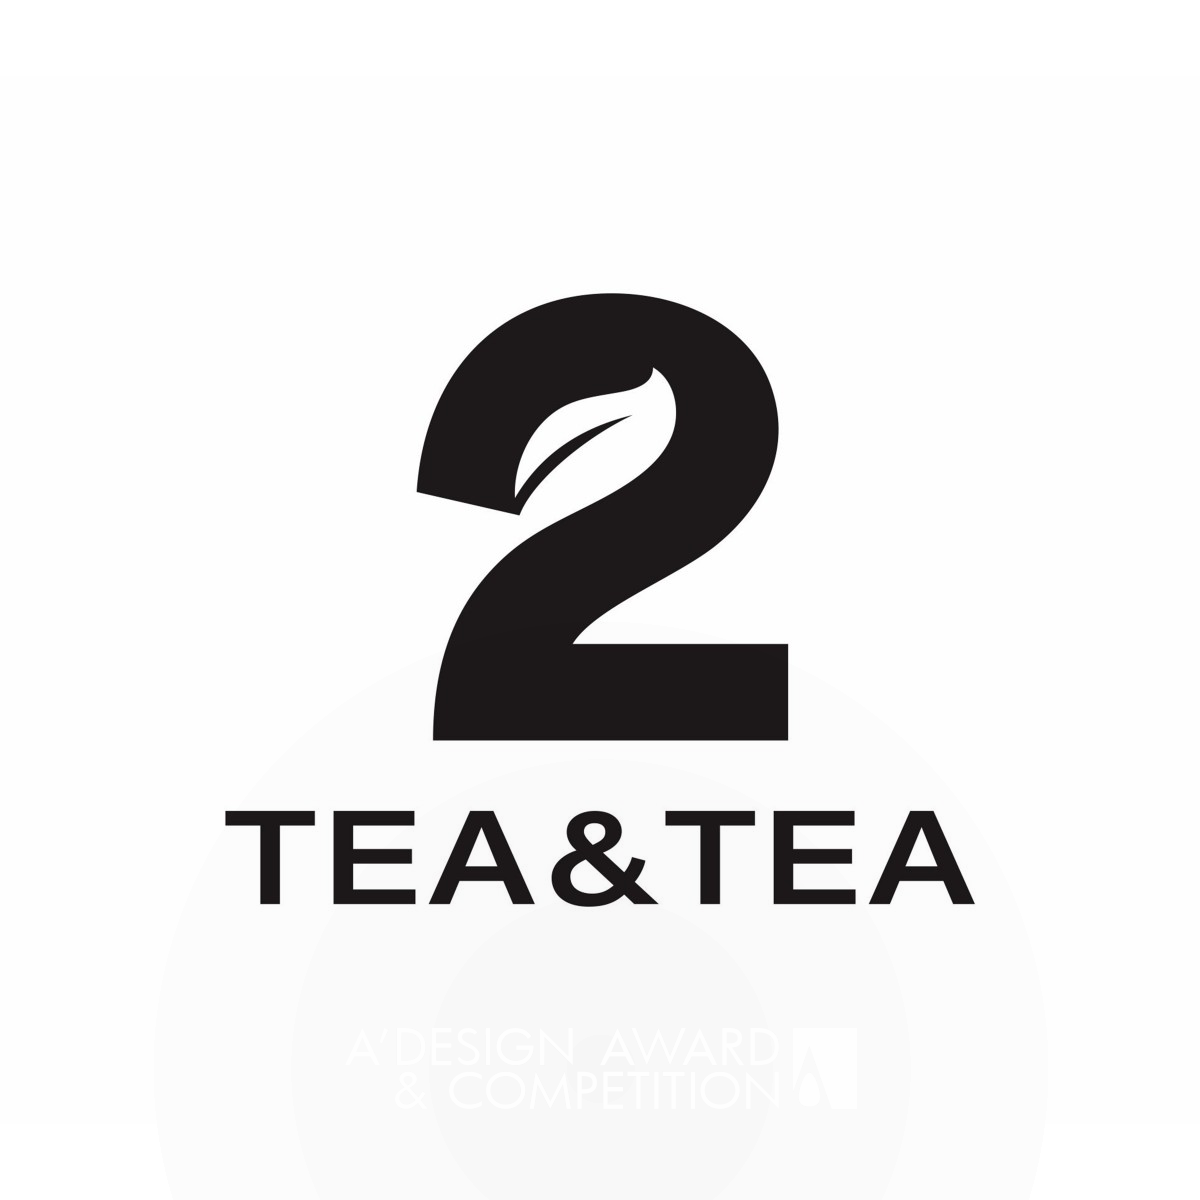 Tea and Tea: A Branding Design by Shenzhen Huathink Design Co., Ltd